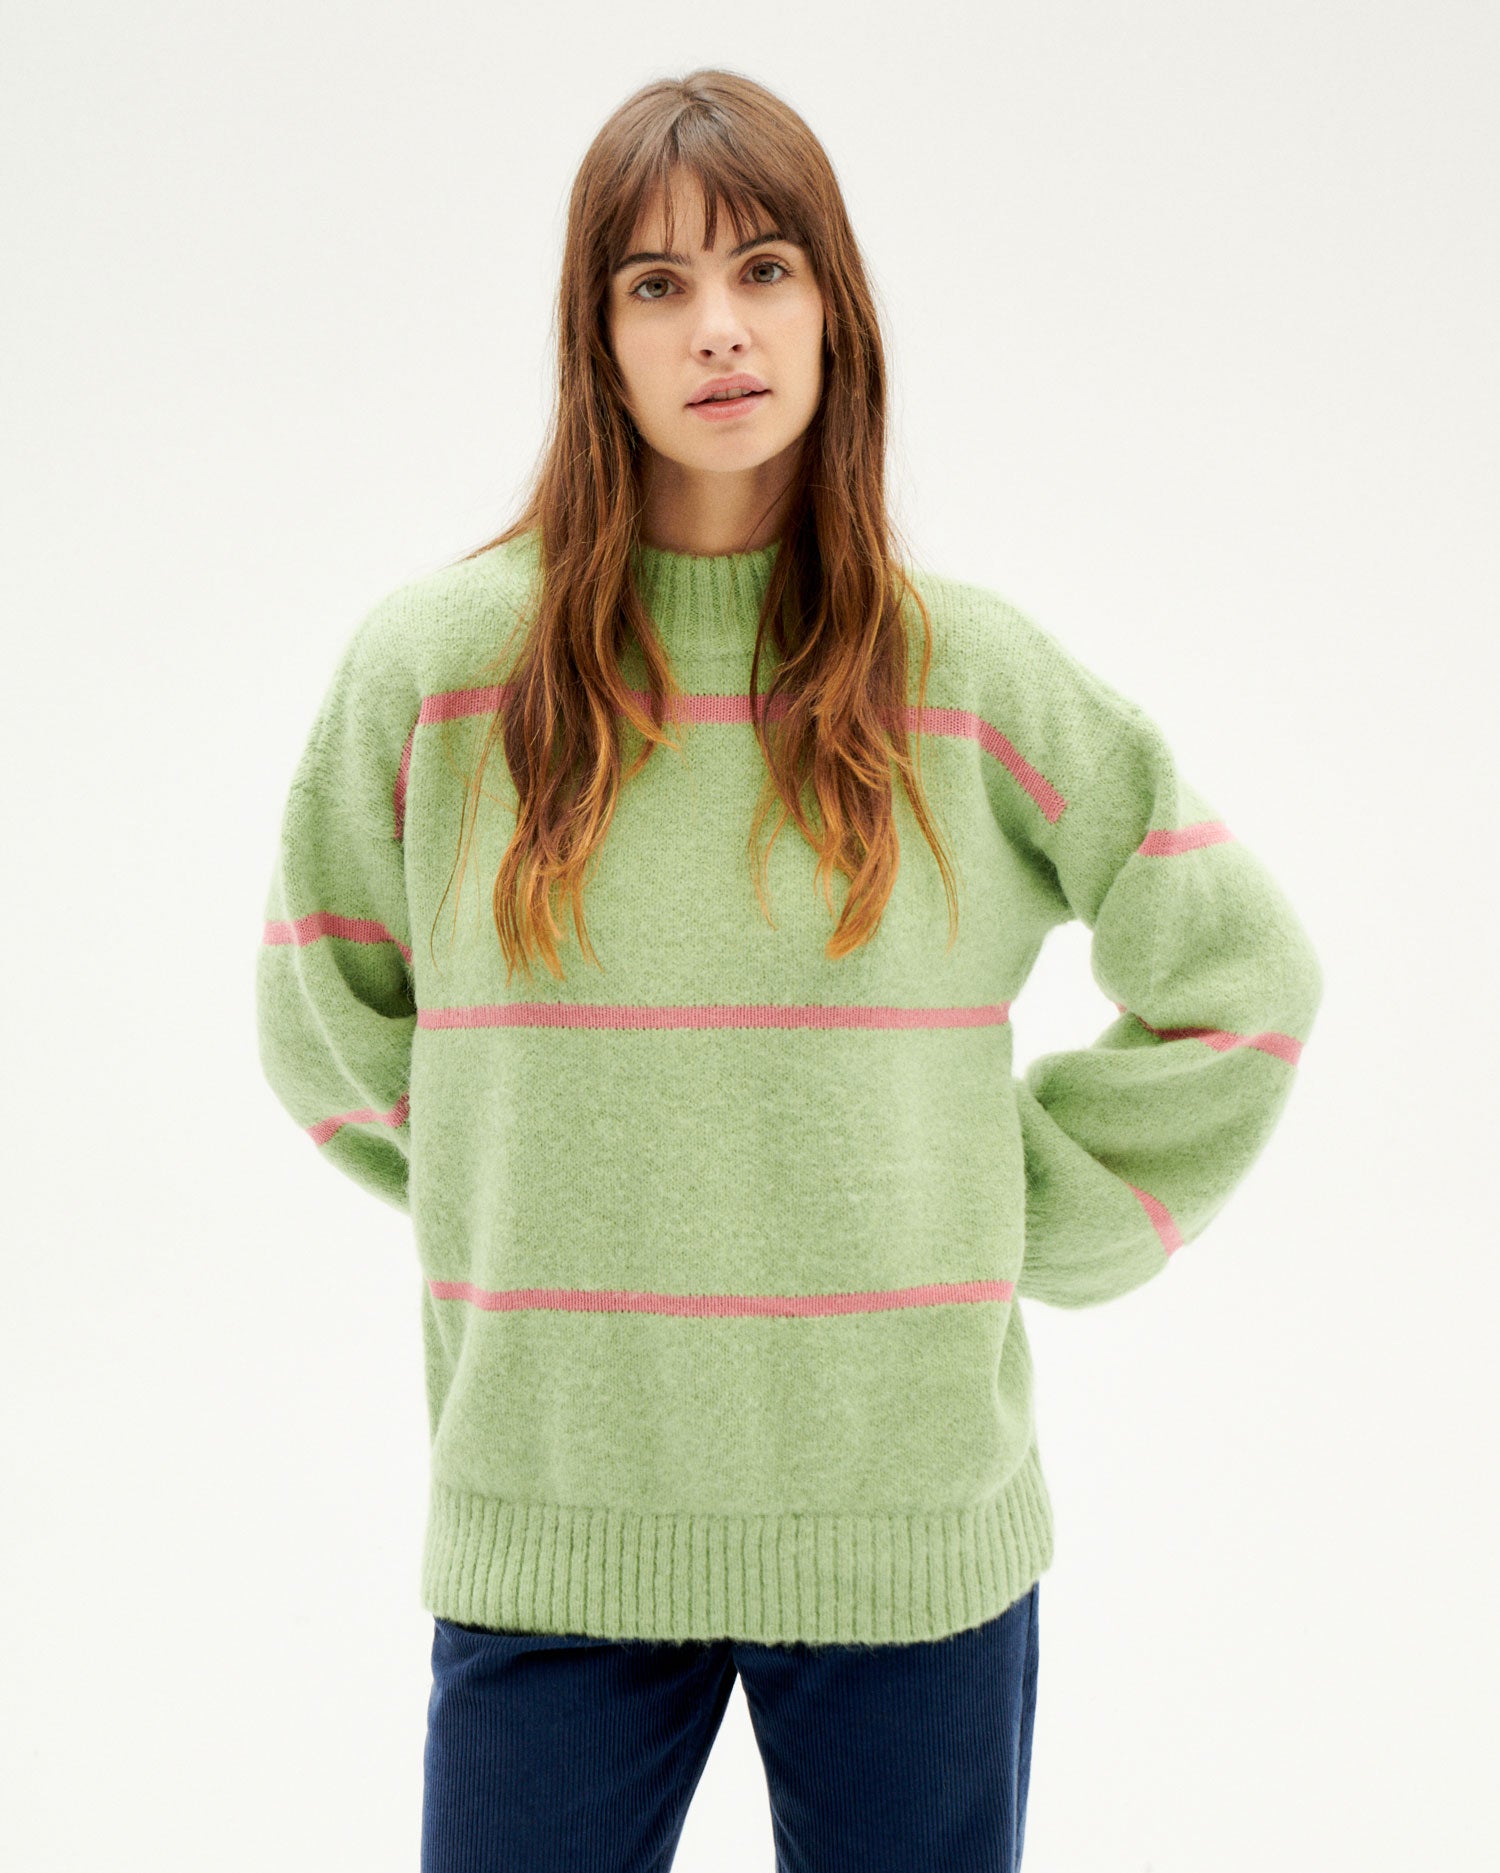 Madi Stripes Sweater - Parrot Green